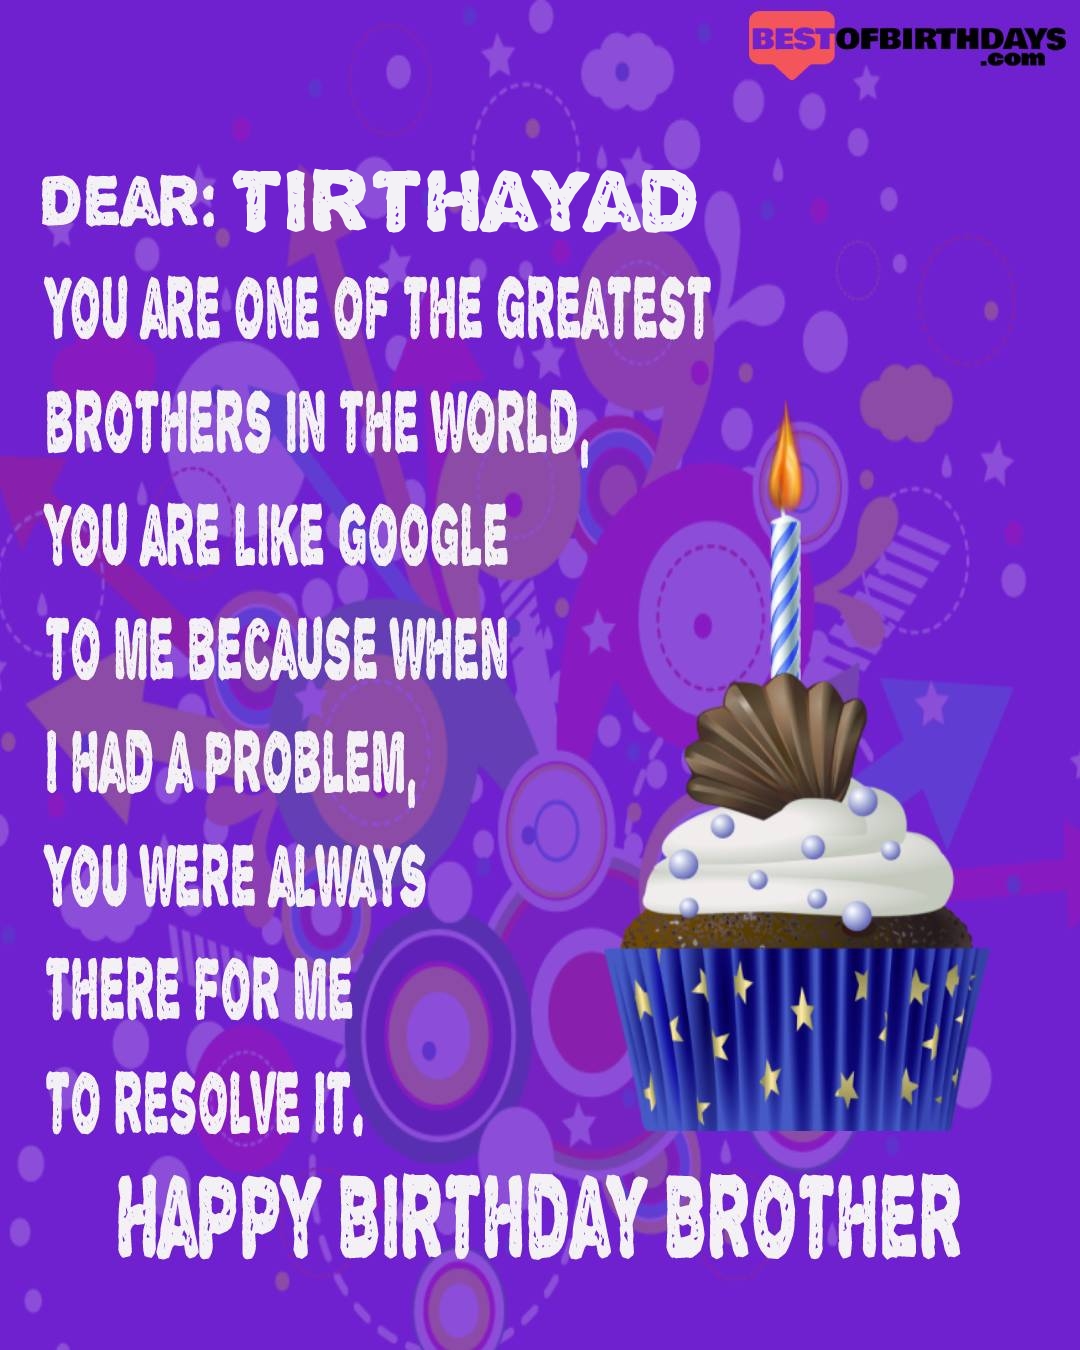 Happy birthday tirthayad bhai brother bro